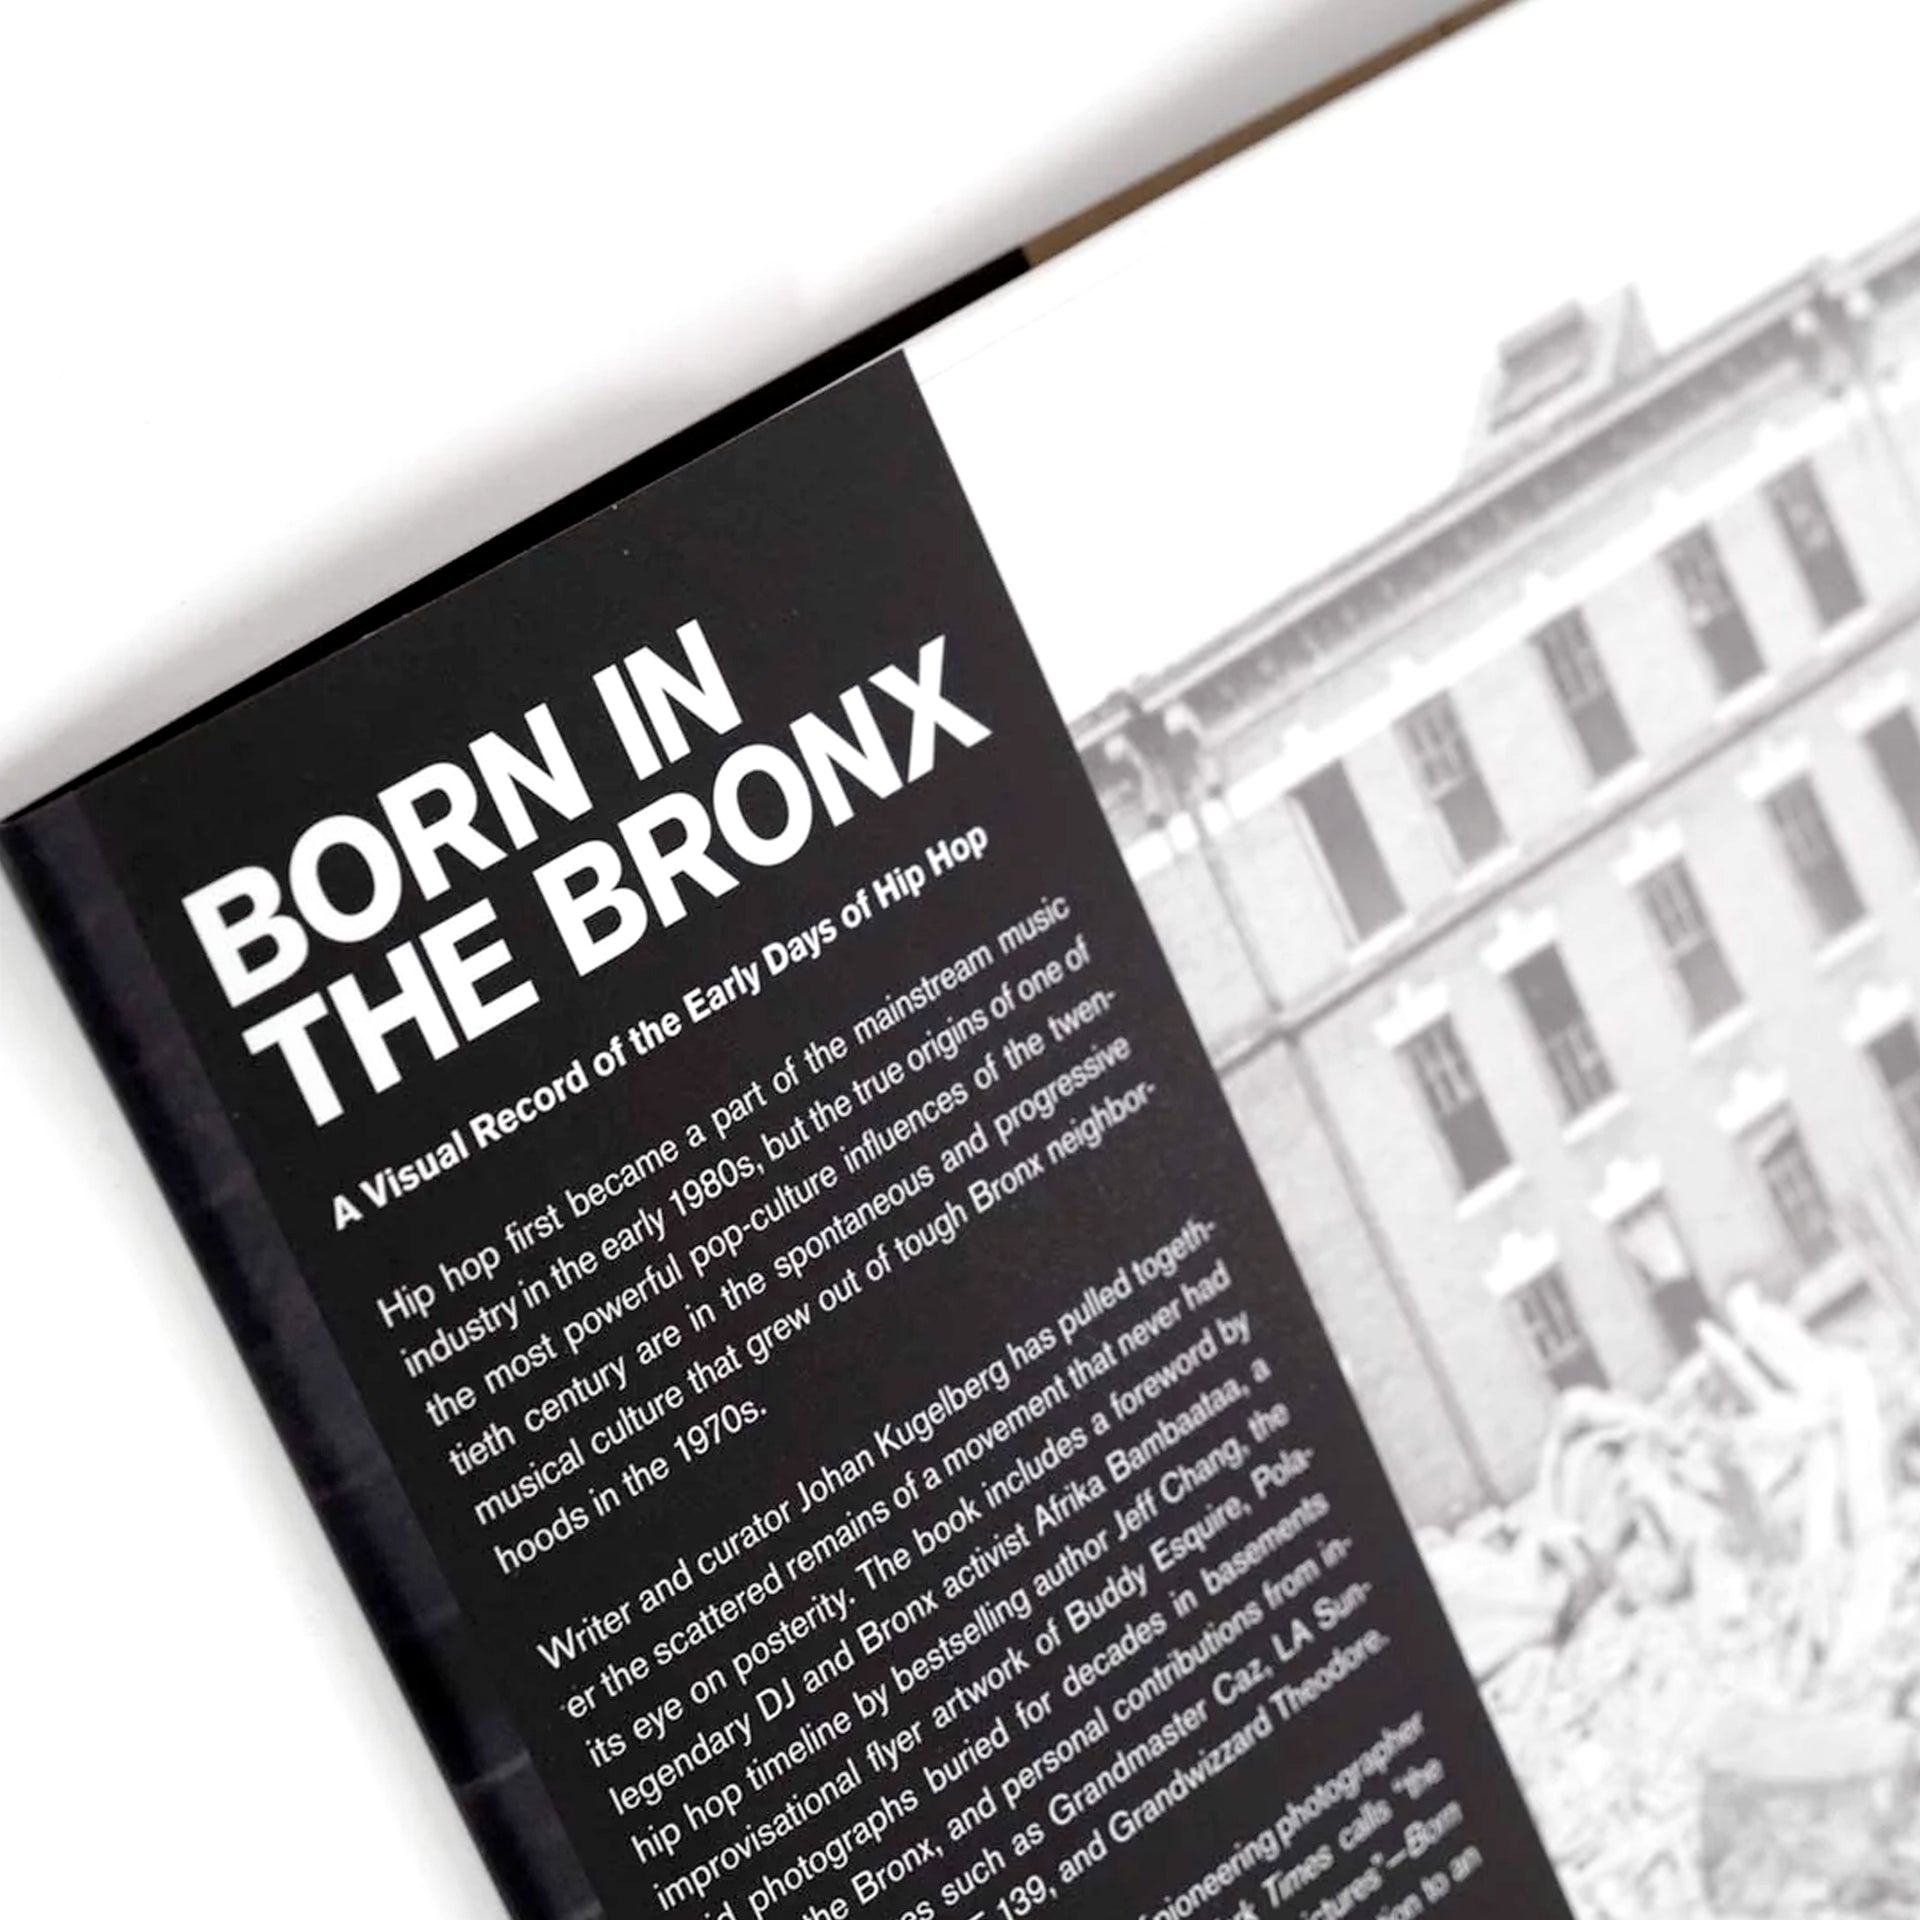 Joe Conzo Jr. SIGNED "Born in the Bronx" Book